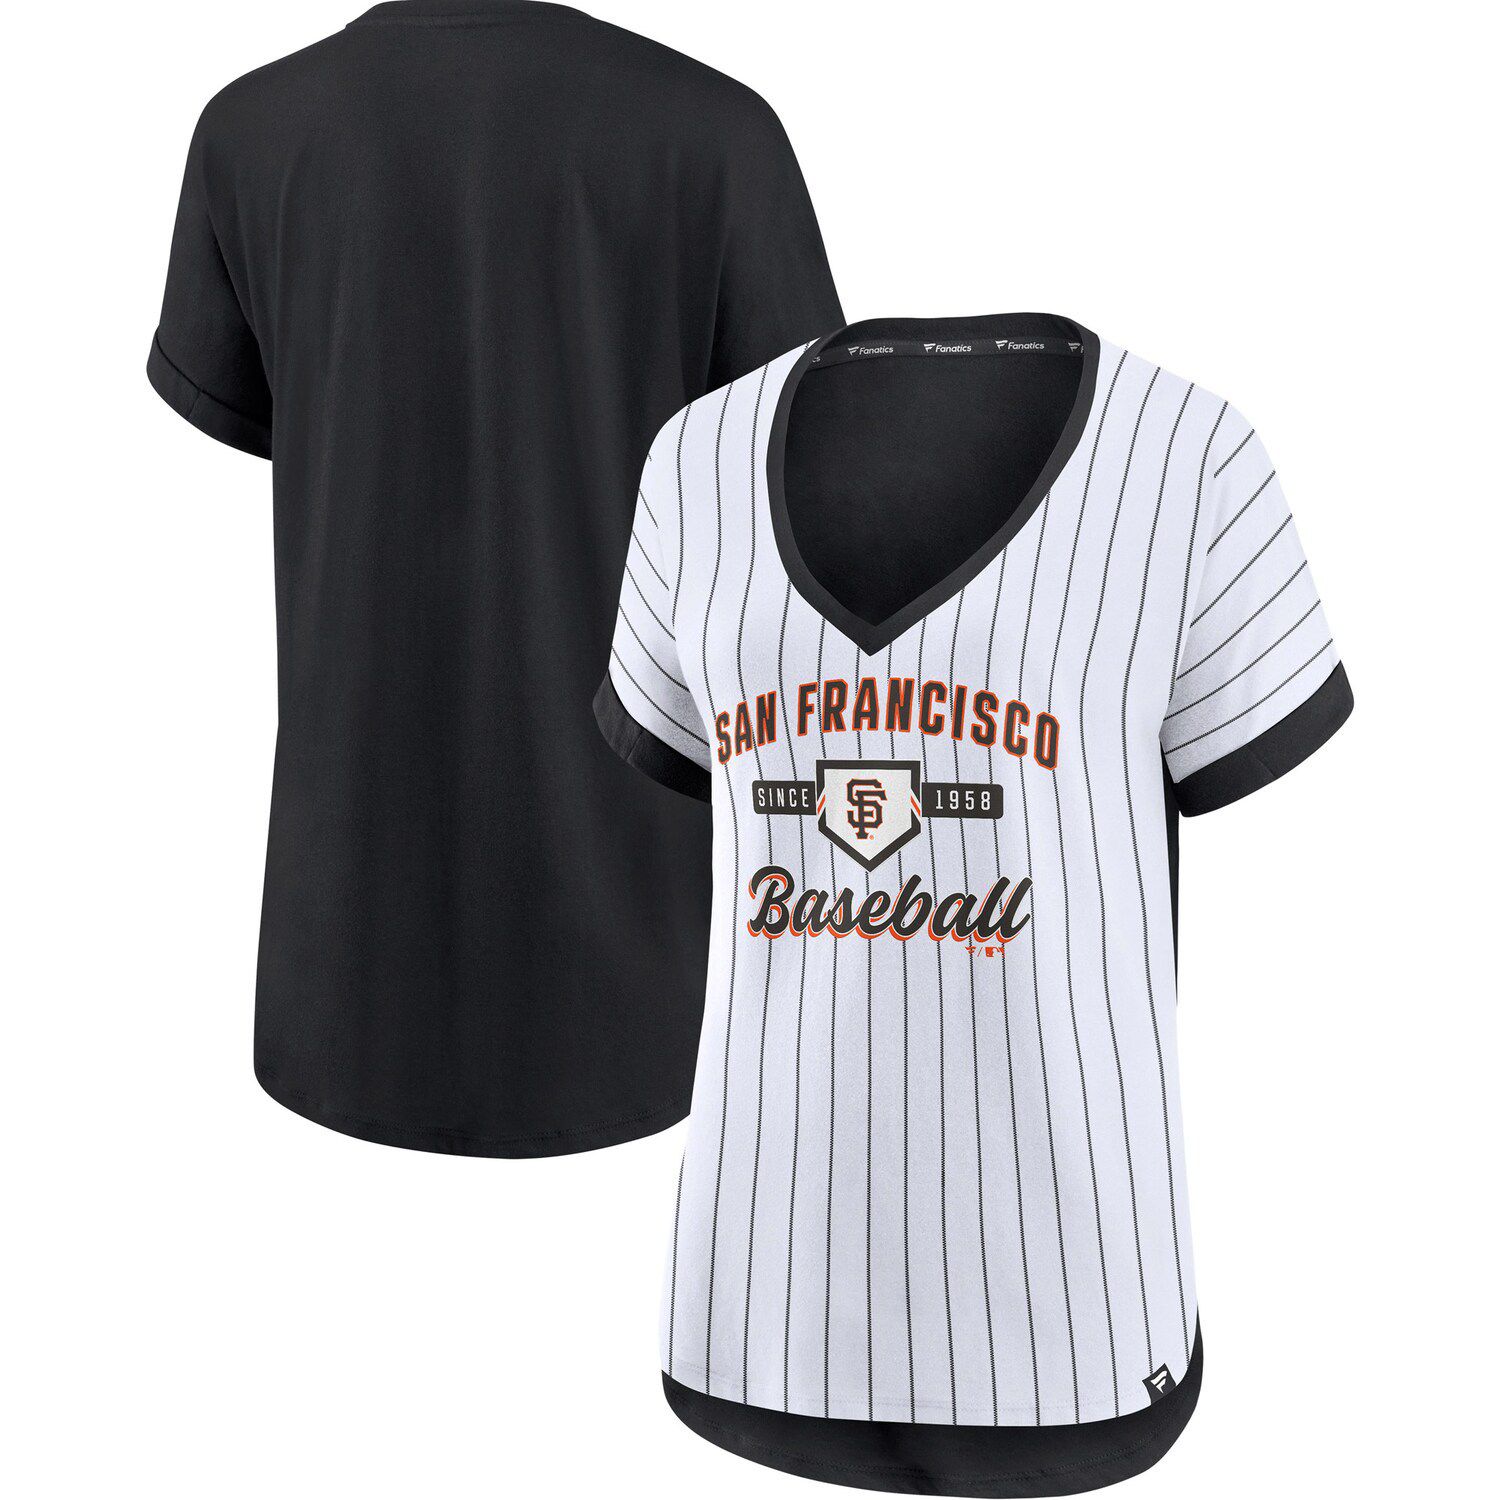 Women's Fanatics Branded Black/White San Francisco Giants Even Match Lace-Up Long Sleeve V-Neck T-Shirt